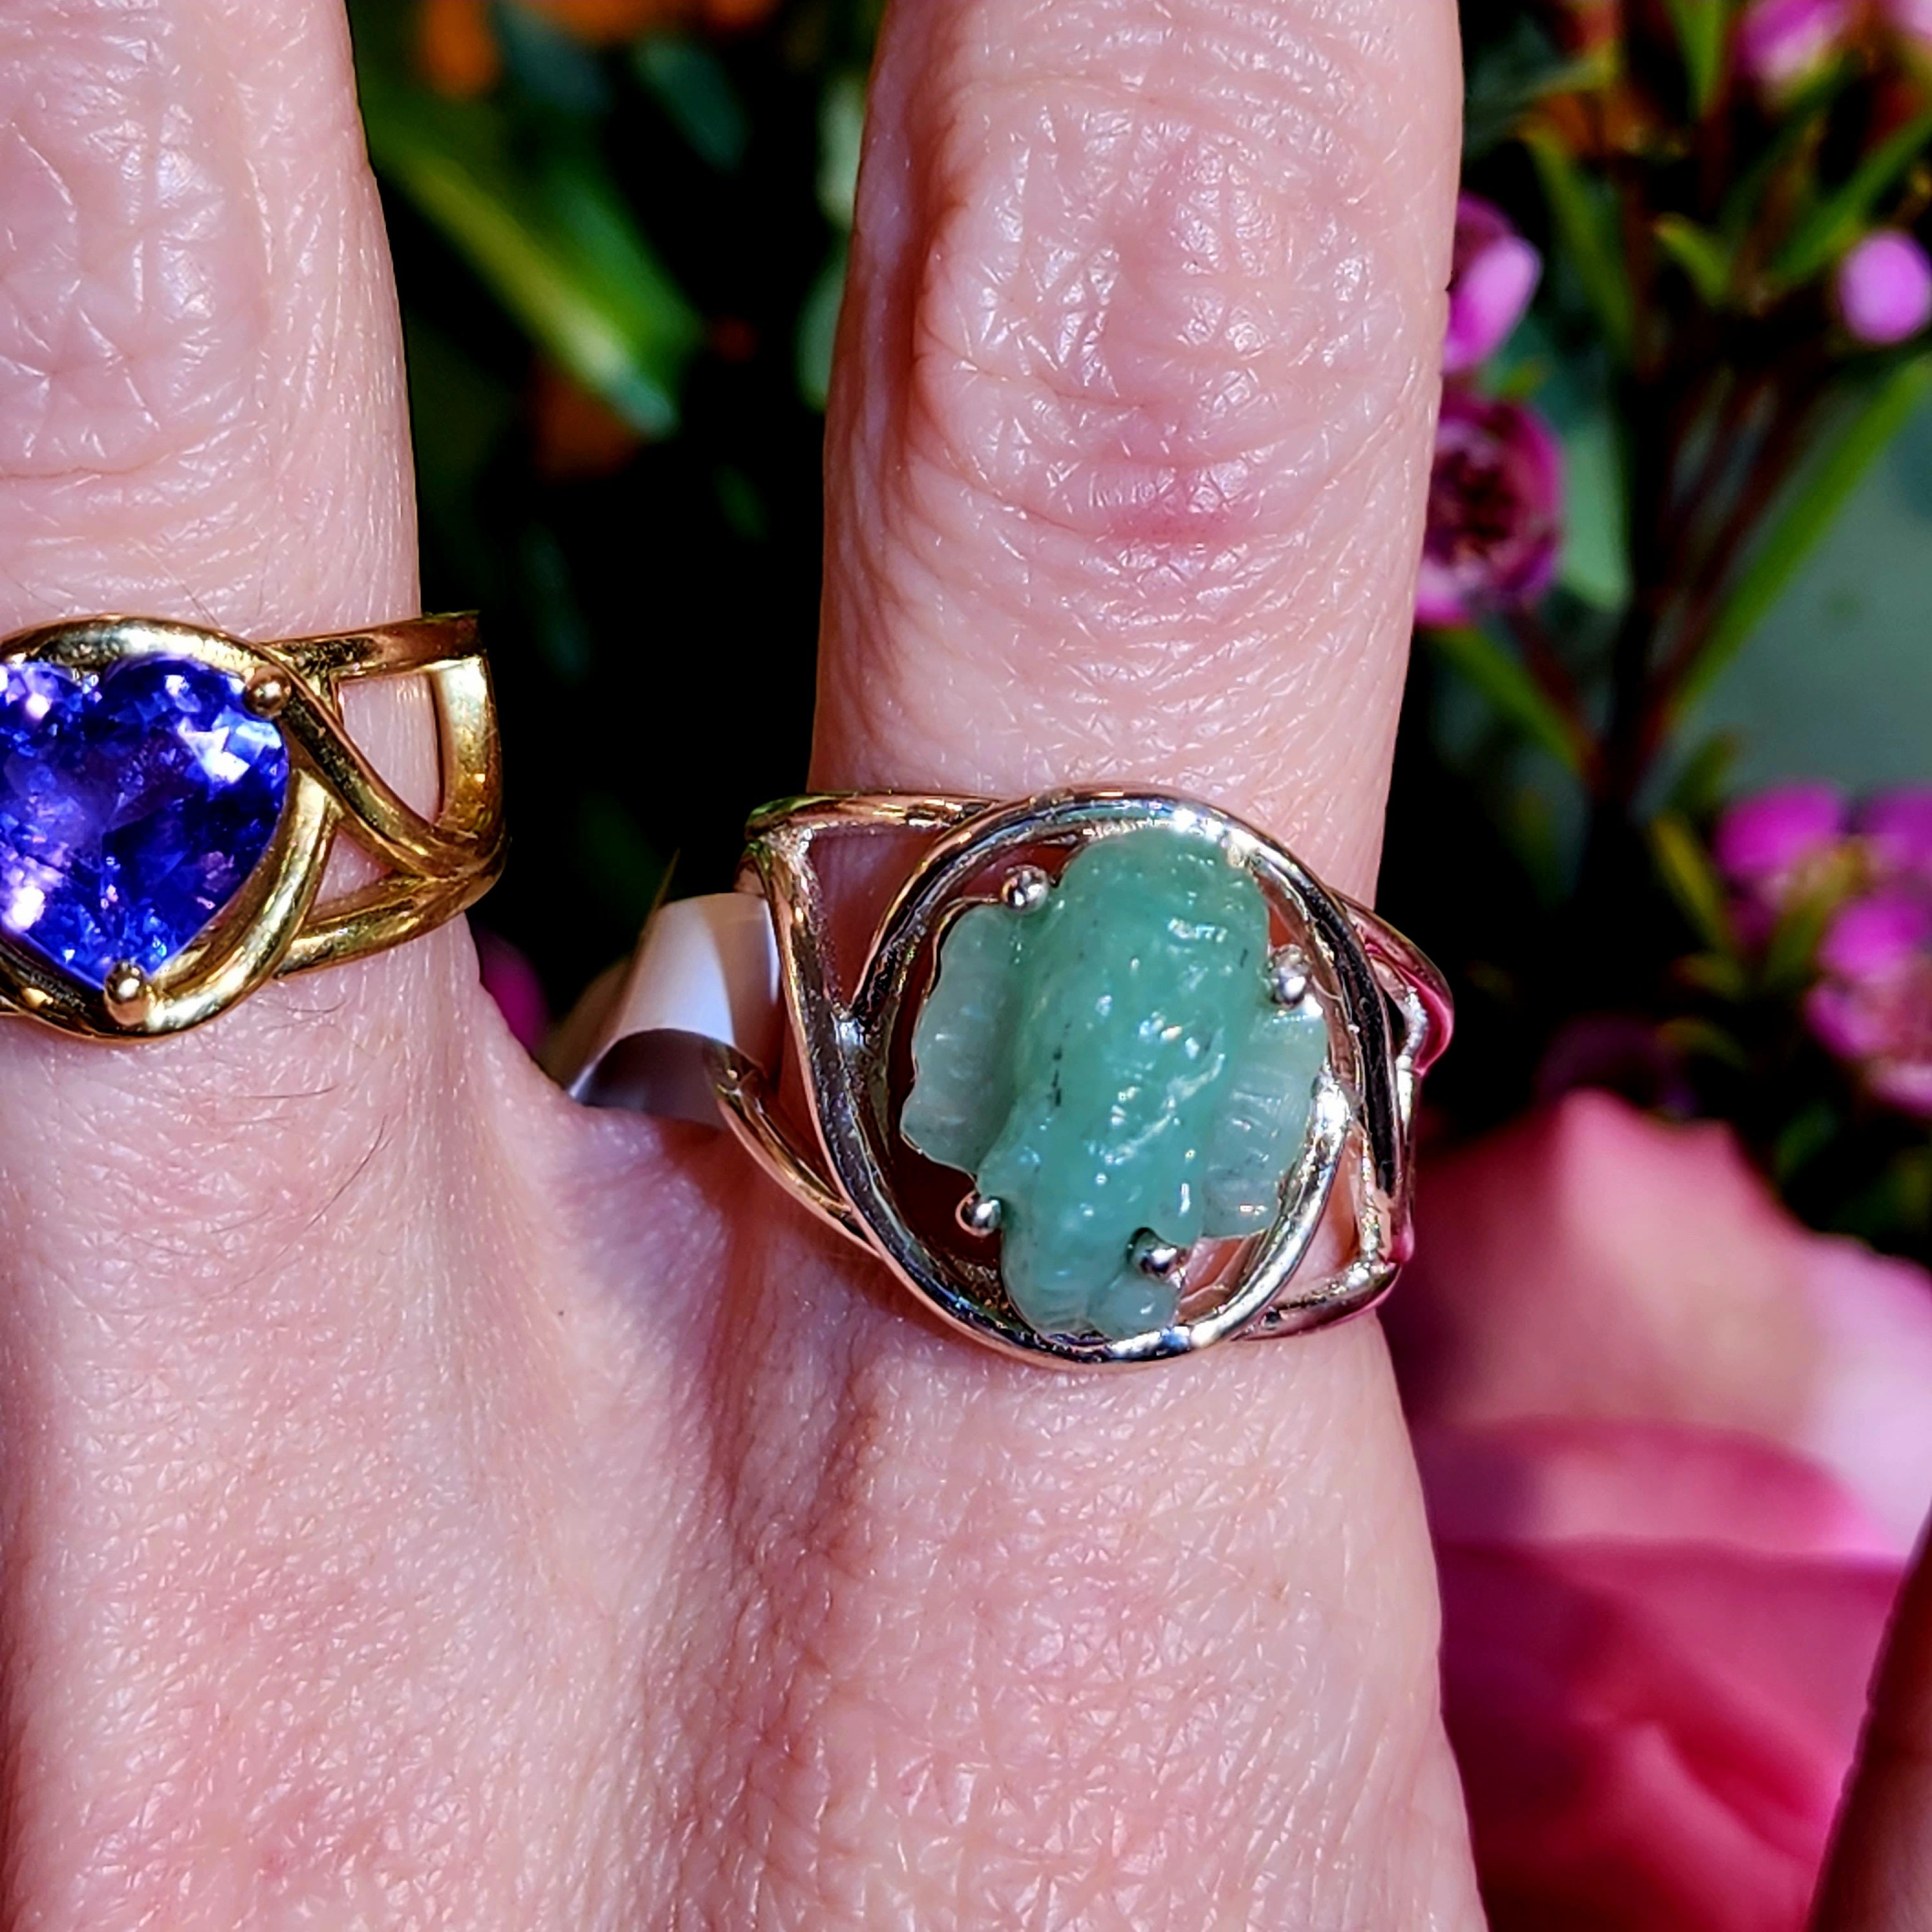 Emerald Ganesha Finger Cuff Adjustable Ring .925 Sterling Silver for Abundance, Love and Wealth